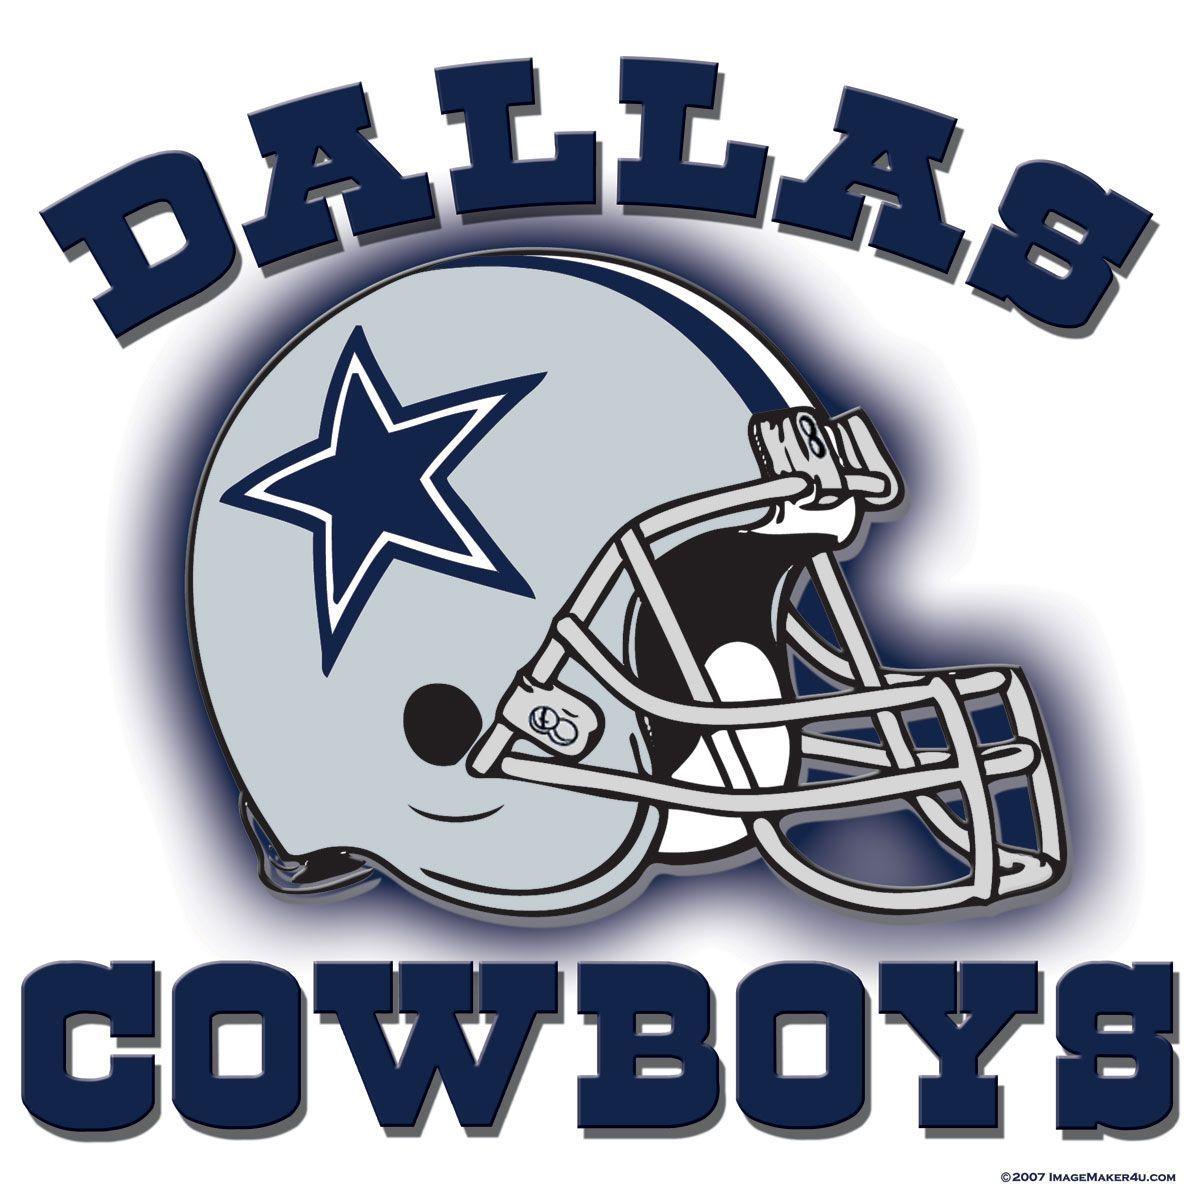 Cowboys Helmet Logo - The Dallas Cowboys! | Orianna LOVES the Dallas Cowboys! | Cowboys ...